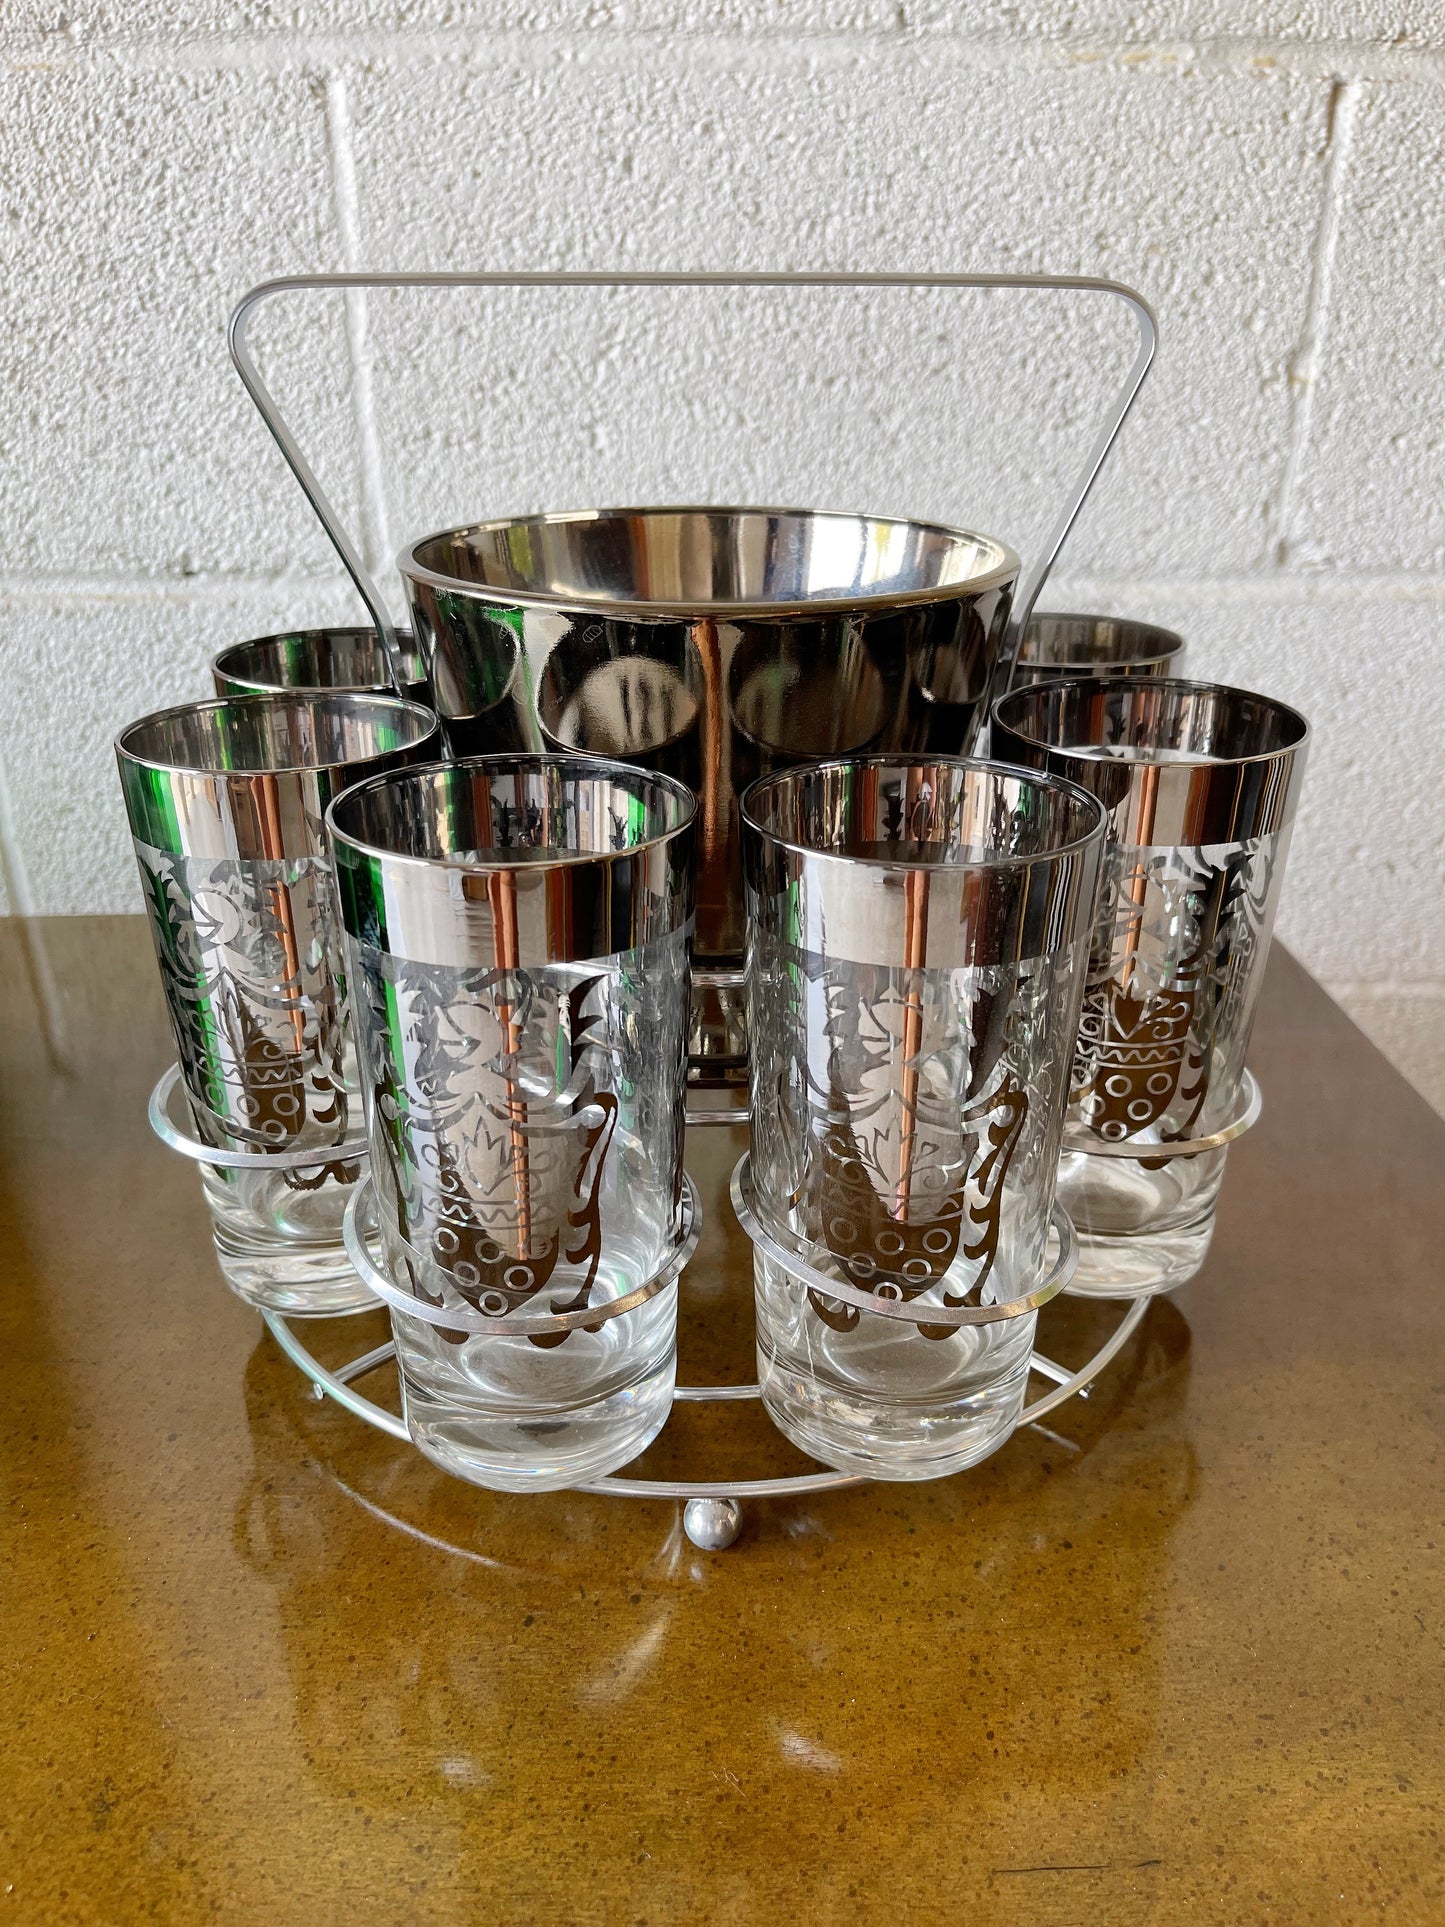 Set of 8 w/ Ice Bucket w/ Carrier - Kimiko Silvered Armored Shields  Highballs Glassware Set